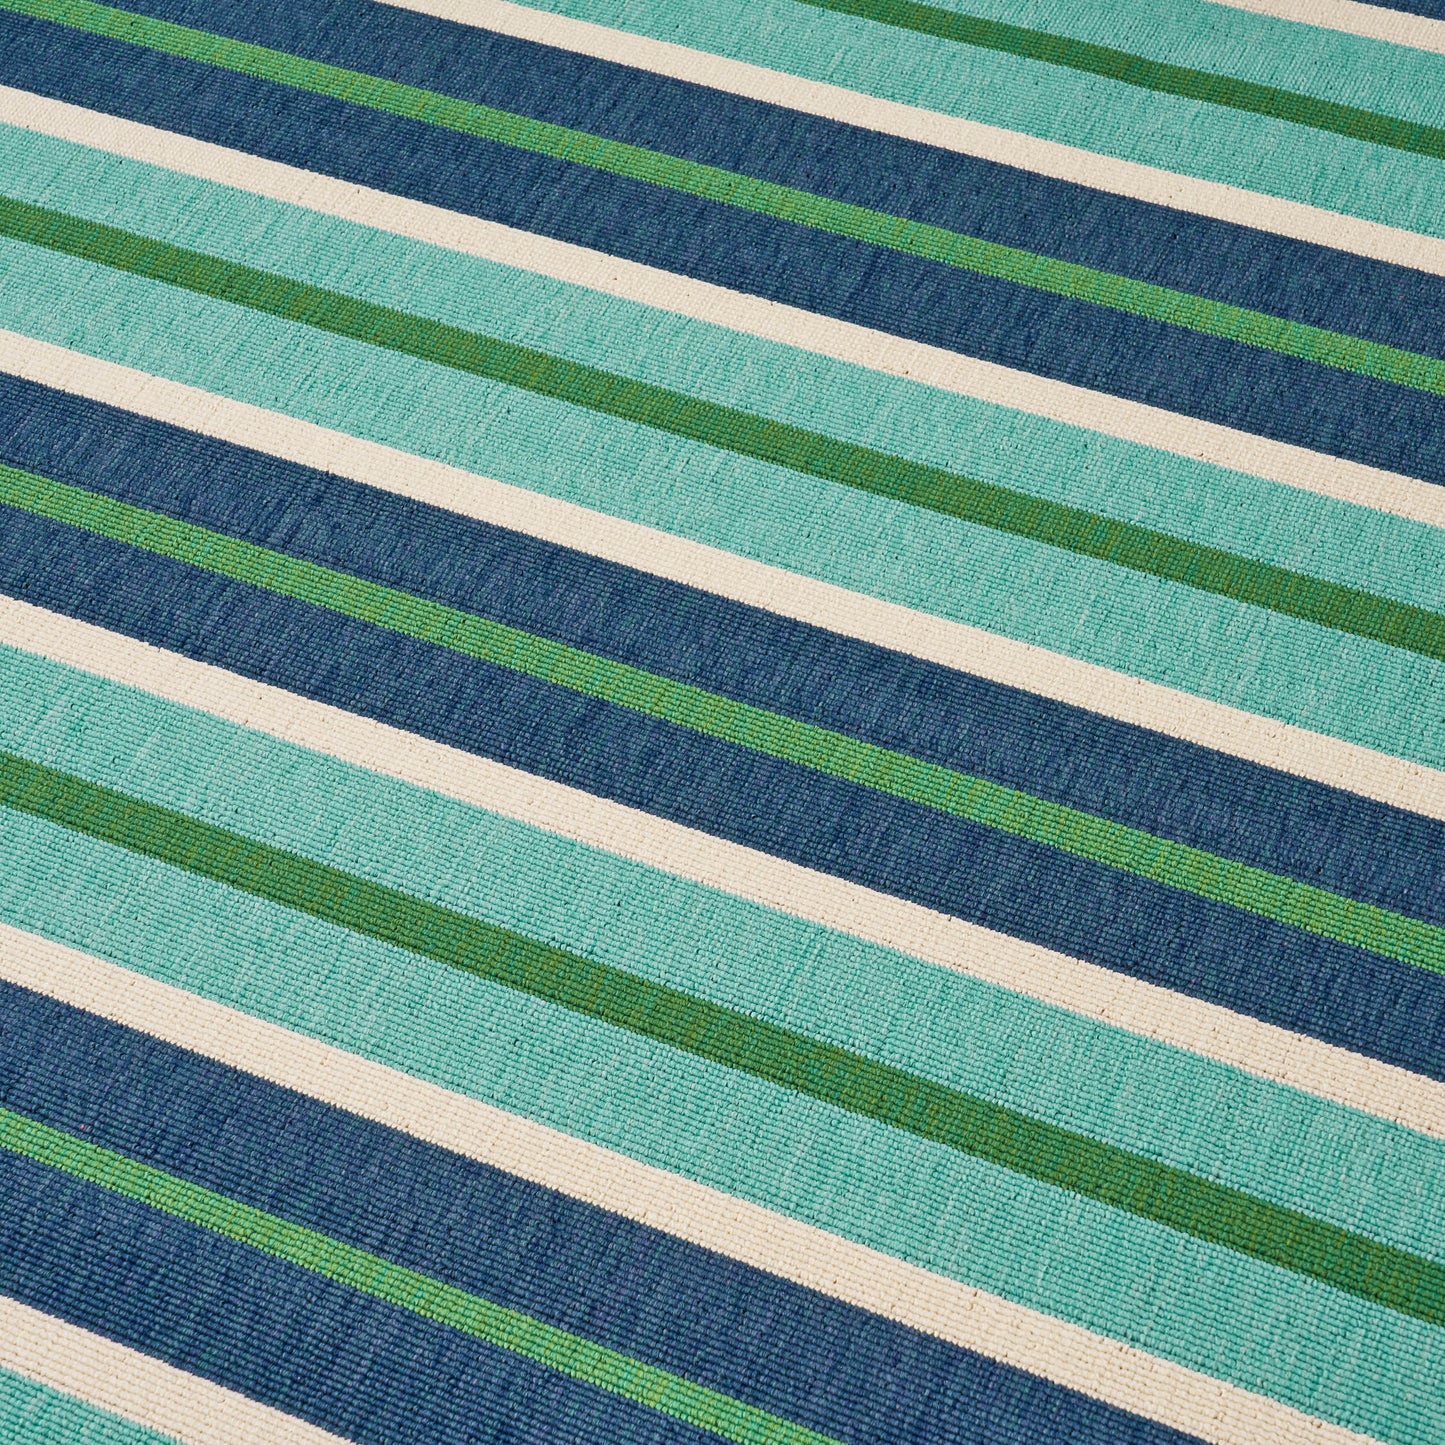 Khaidyn Outdoor Modern Striped Blue and Green Rectangular Area Rug